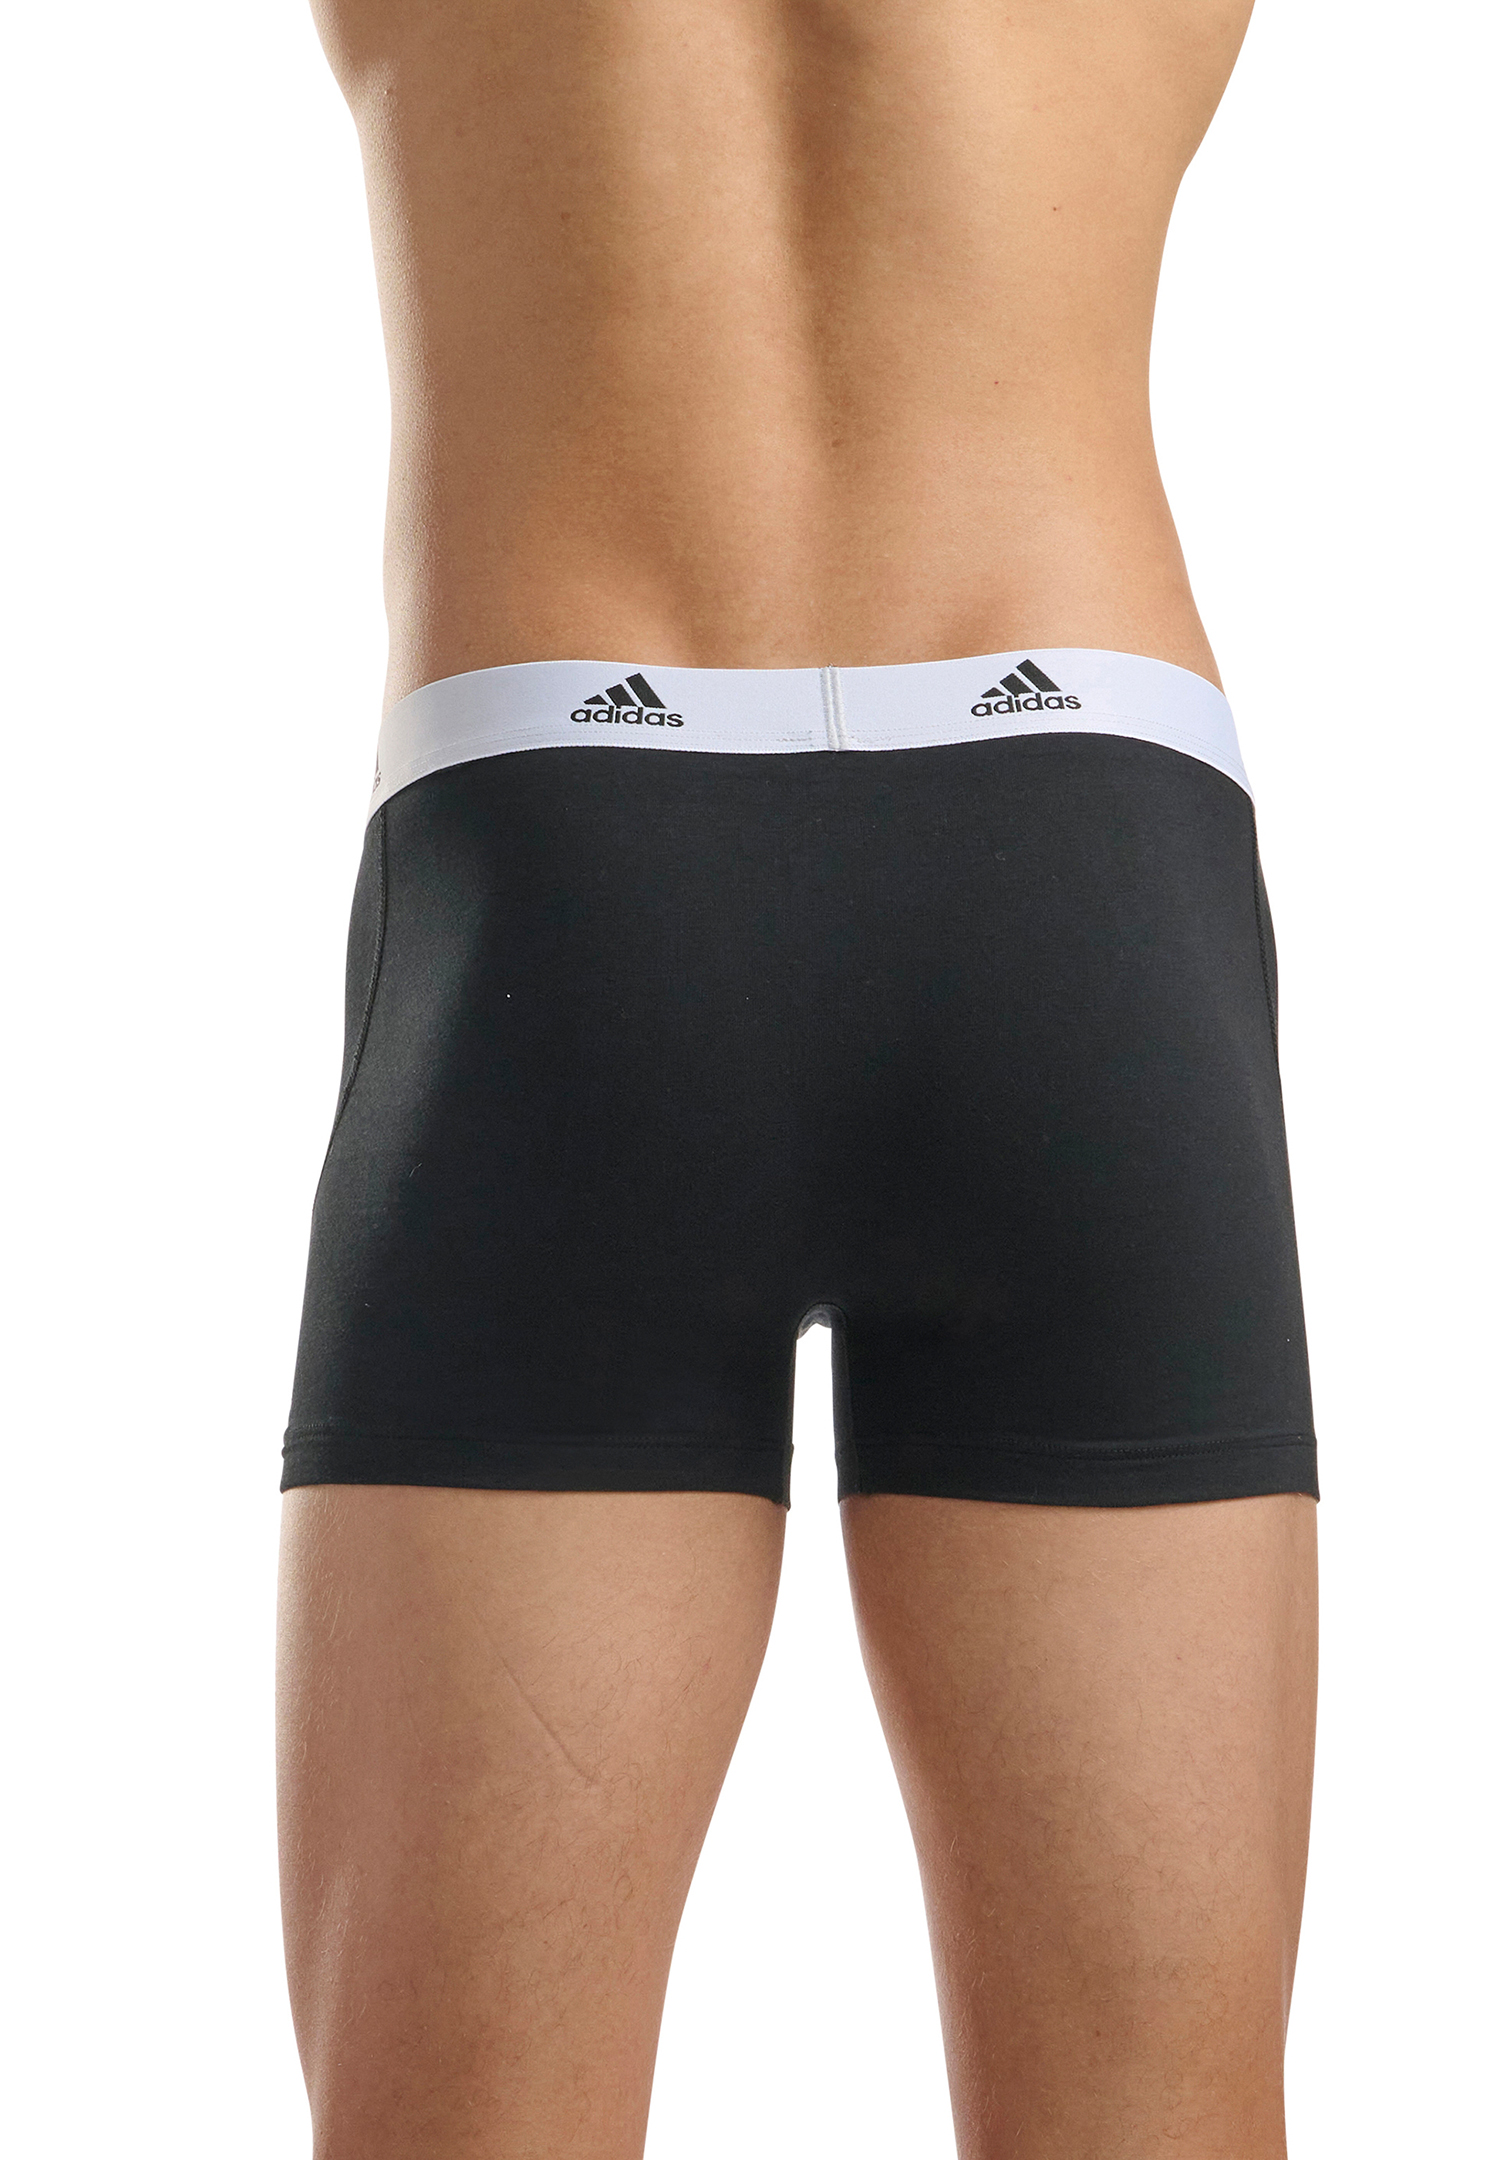 12er PACK Adidas Basic Trunk Men Herren Unterhose Shorts Unterwäsche 12er Pack 